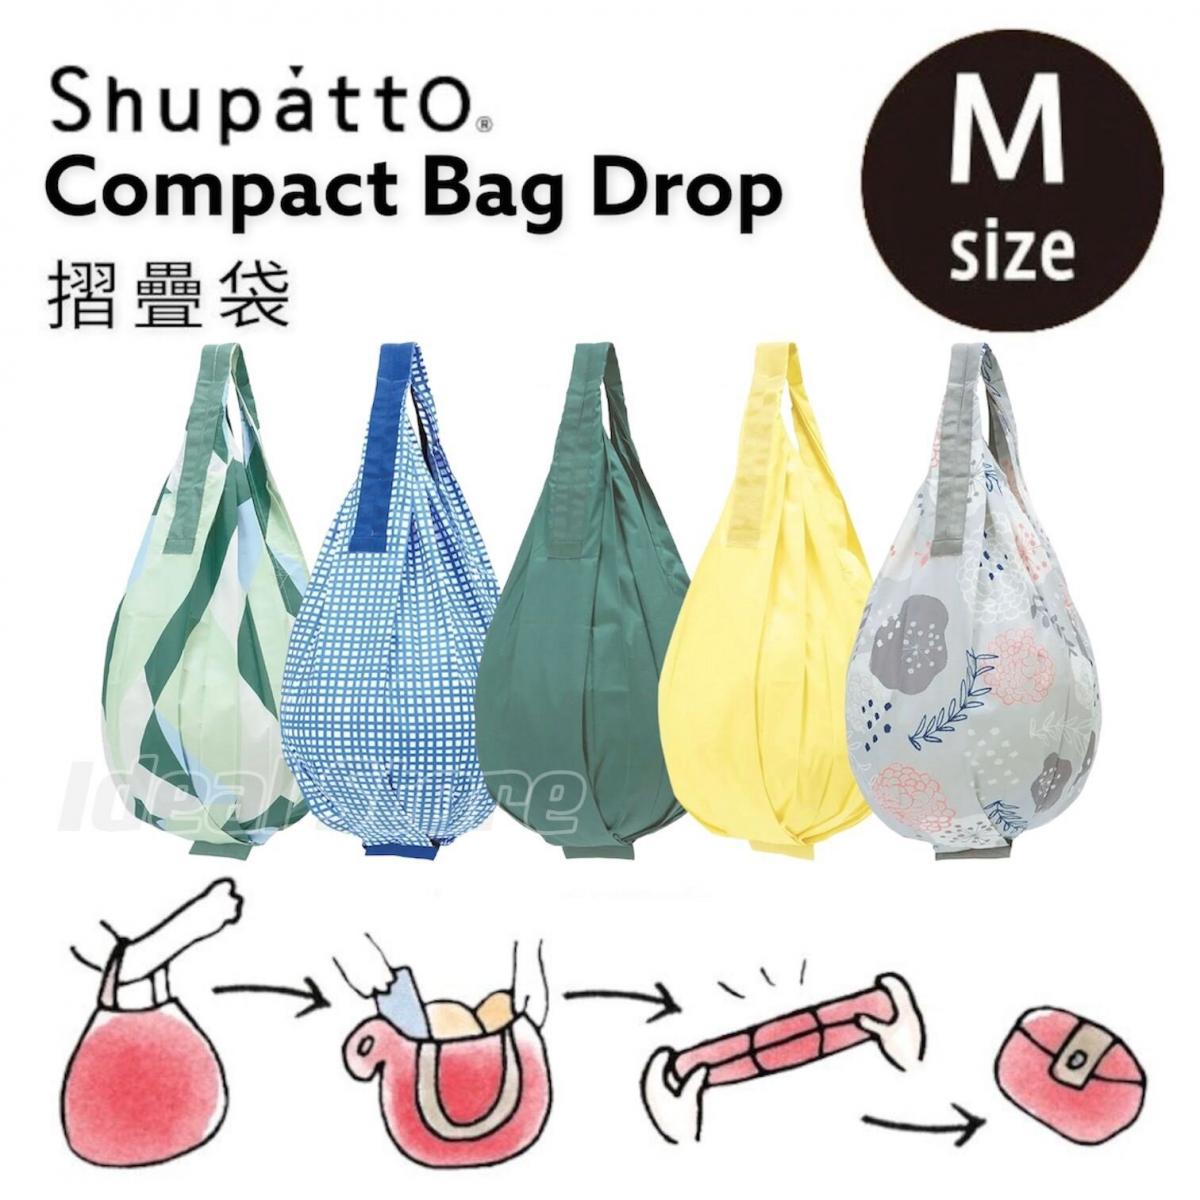 Shupatto - Compact Bag Drop 極速摺疊收納袋 (M SIze)｜Marna｜購物袋｜環保袋｜快速收納｜口袋包 - Eucalyptus (桉樹綠)